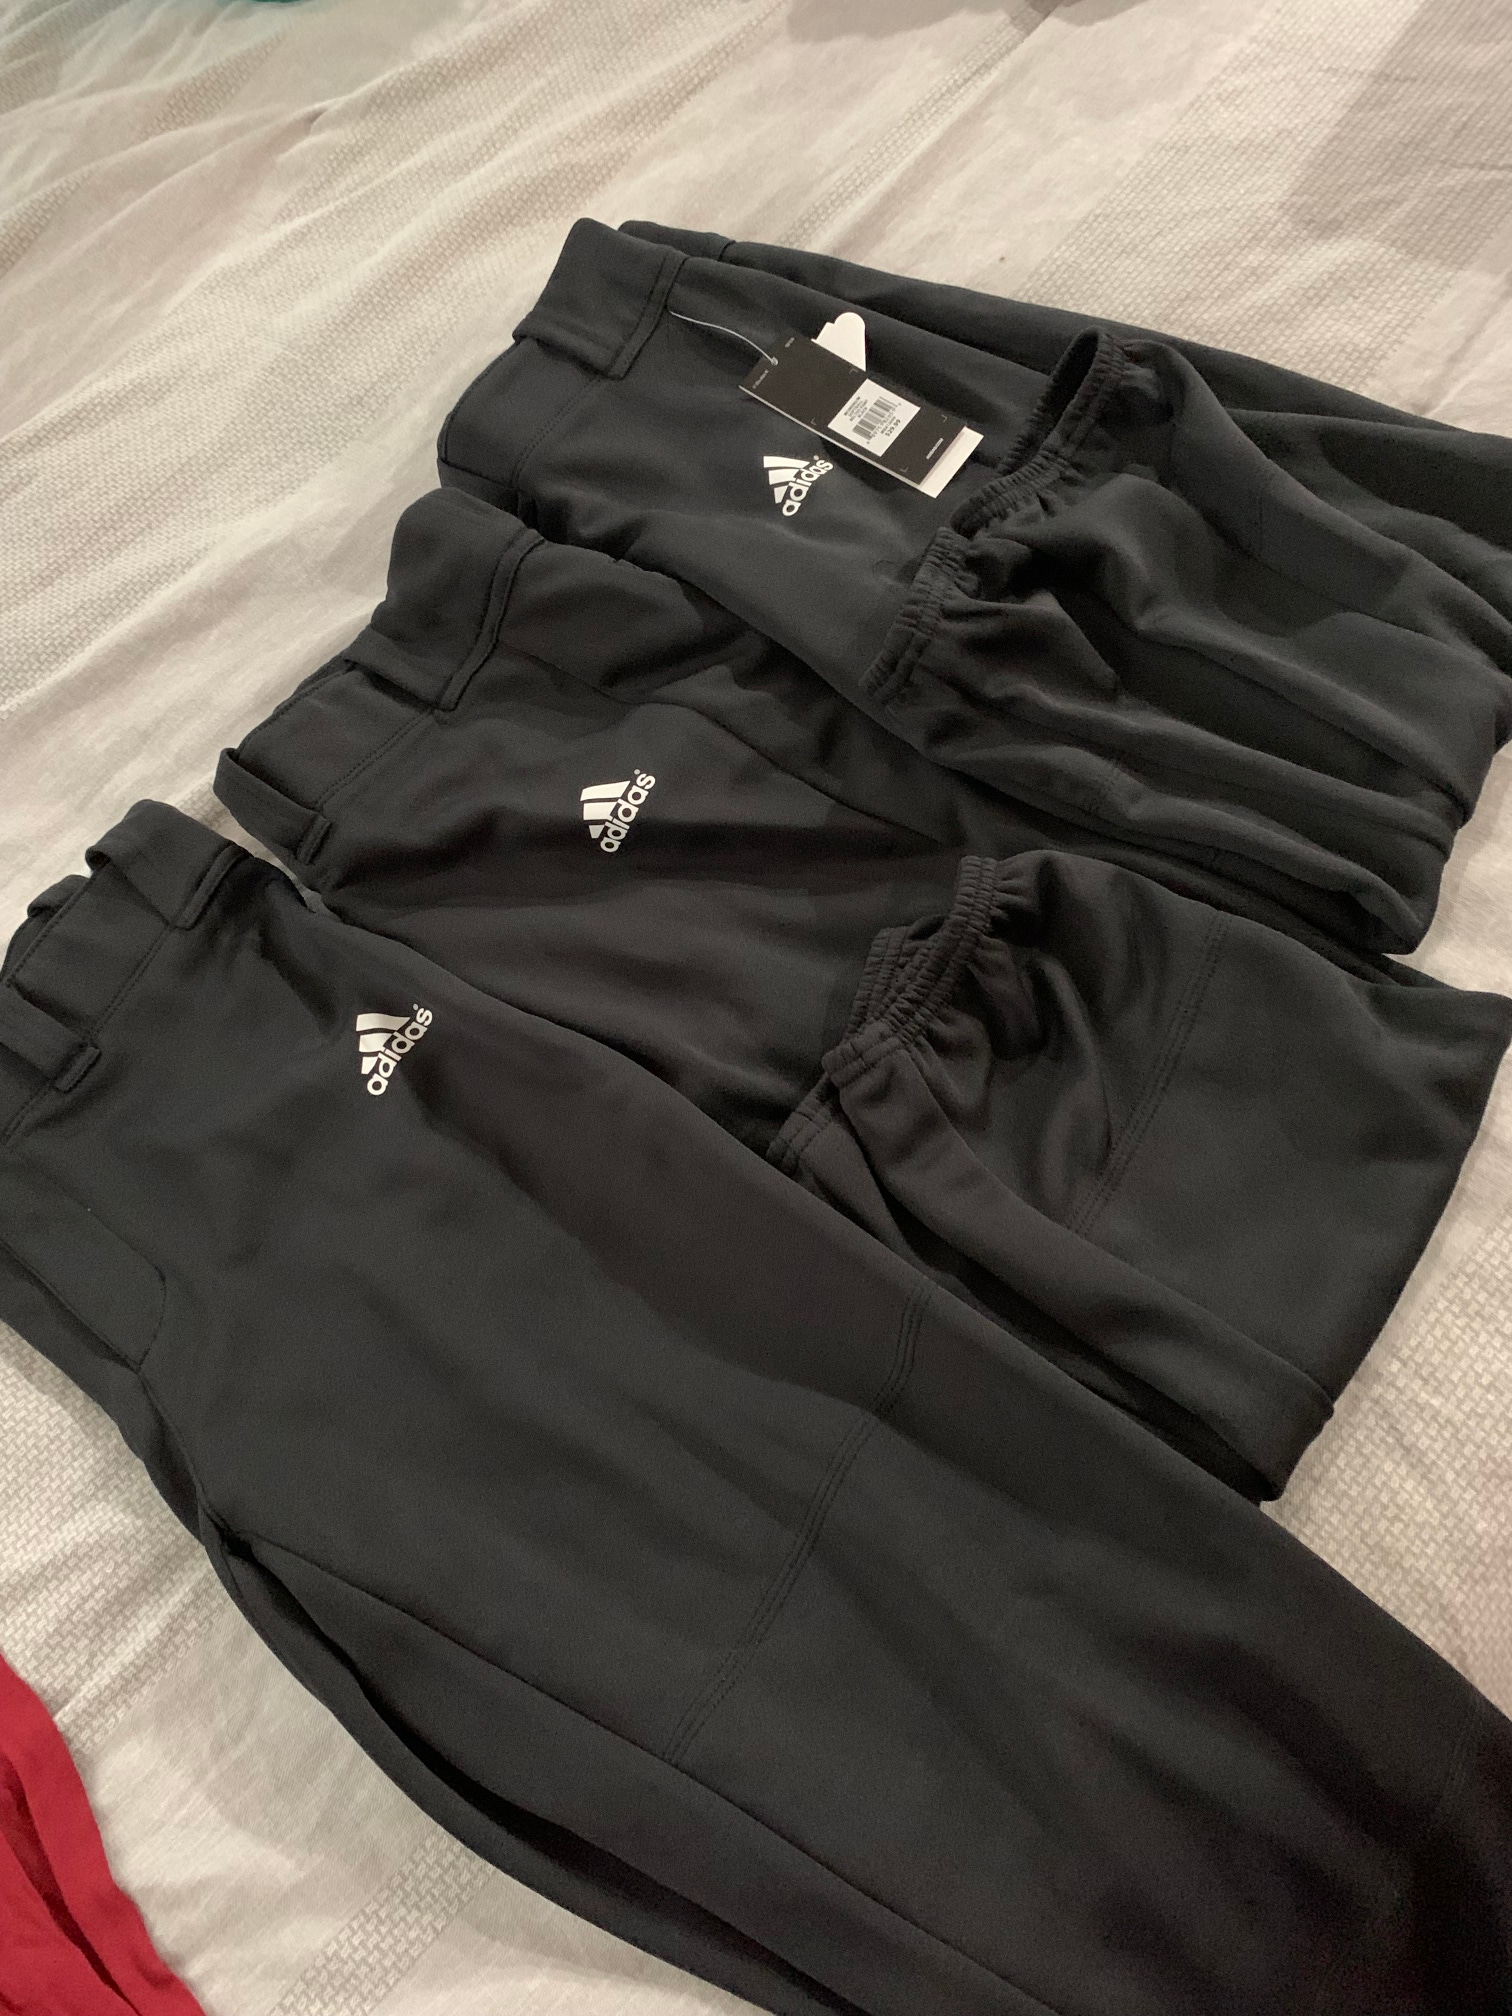 Black Women's Adult New Medium Adidas Game Pants